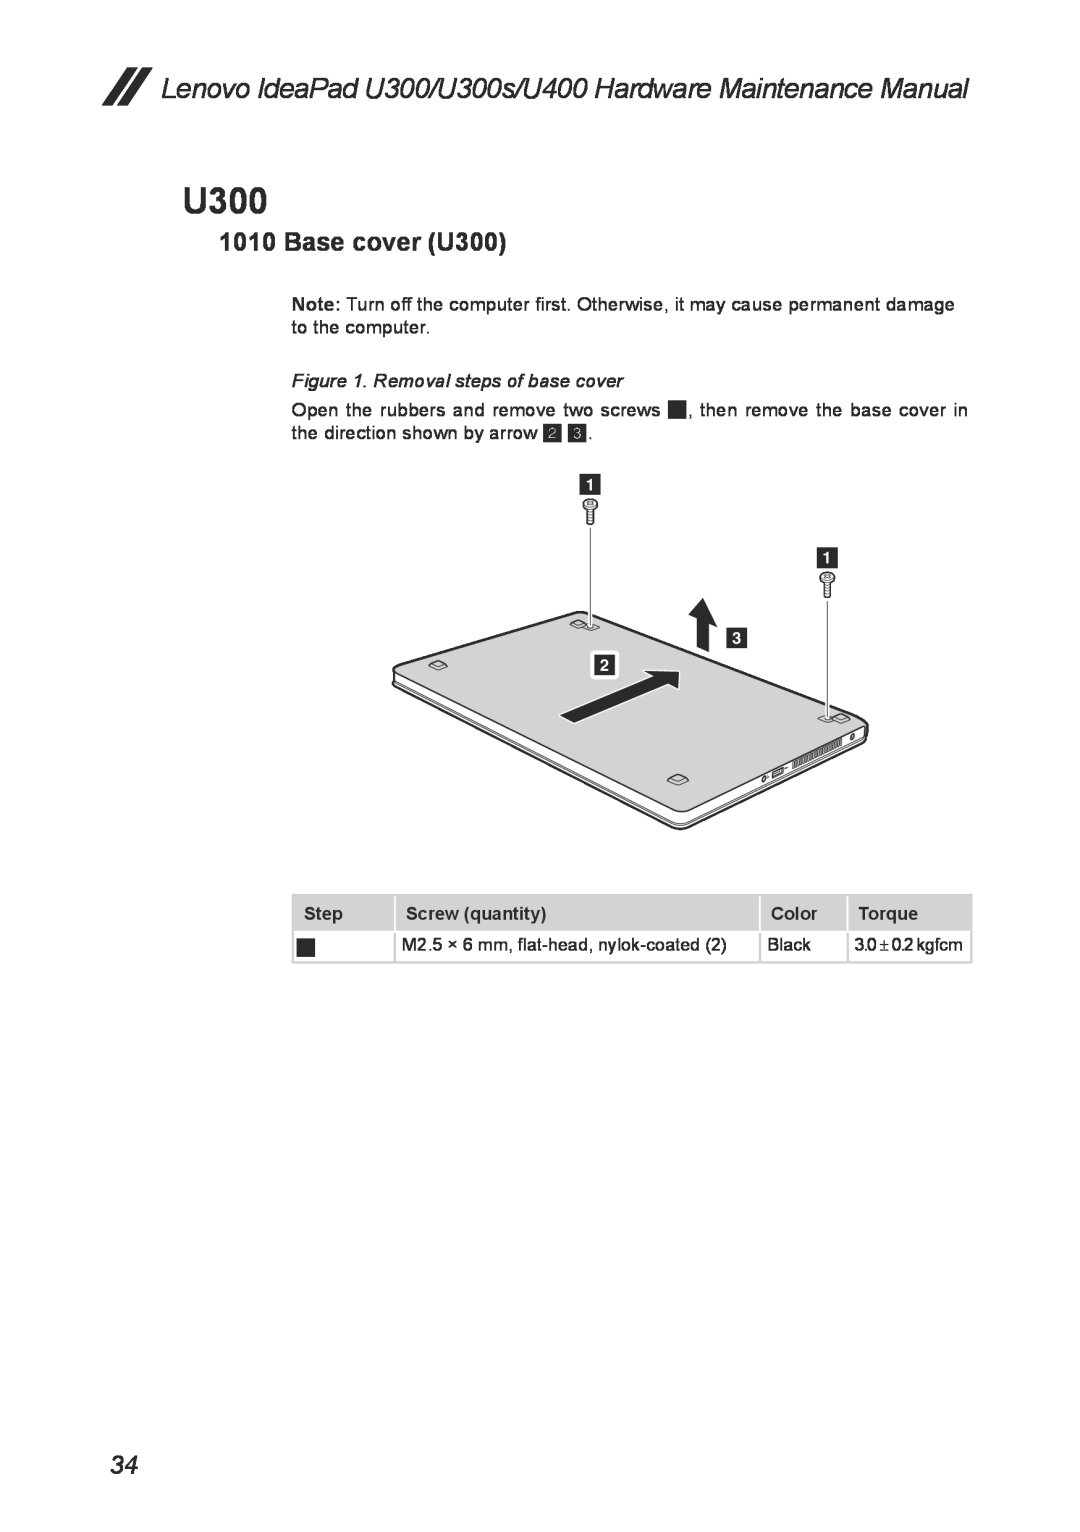 Lenovo Base cover U300, Removal steps of base cover, Lenovo IdeaPad U300/U300s/U400 Hardware Maintenance Manual 